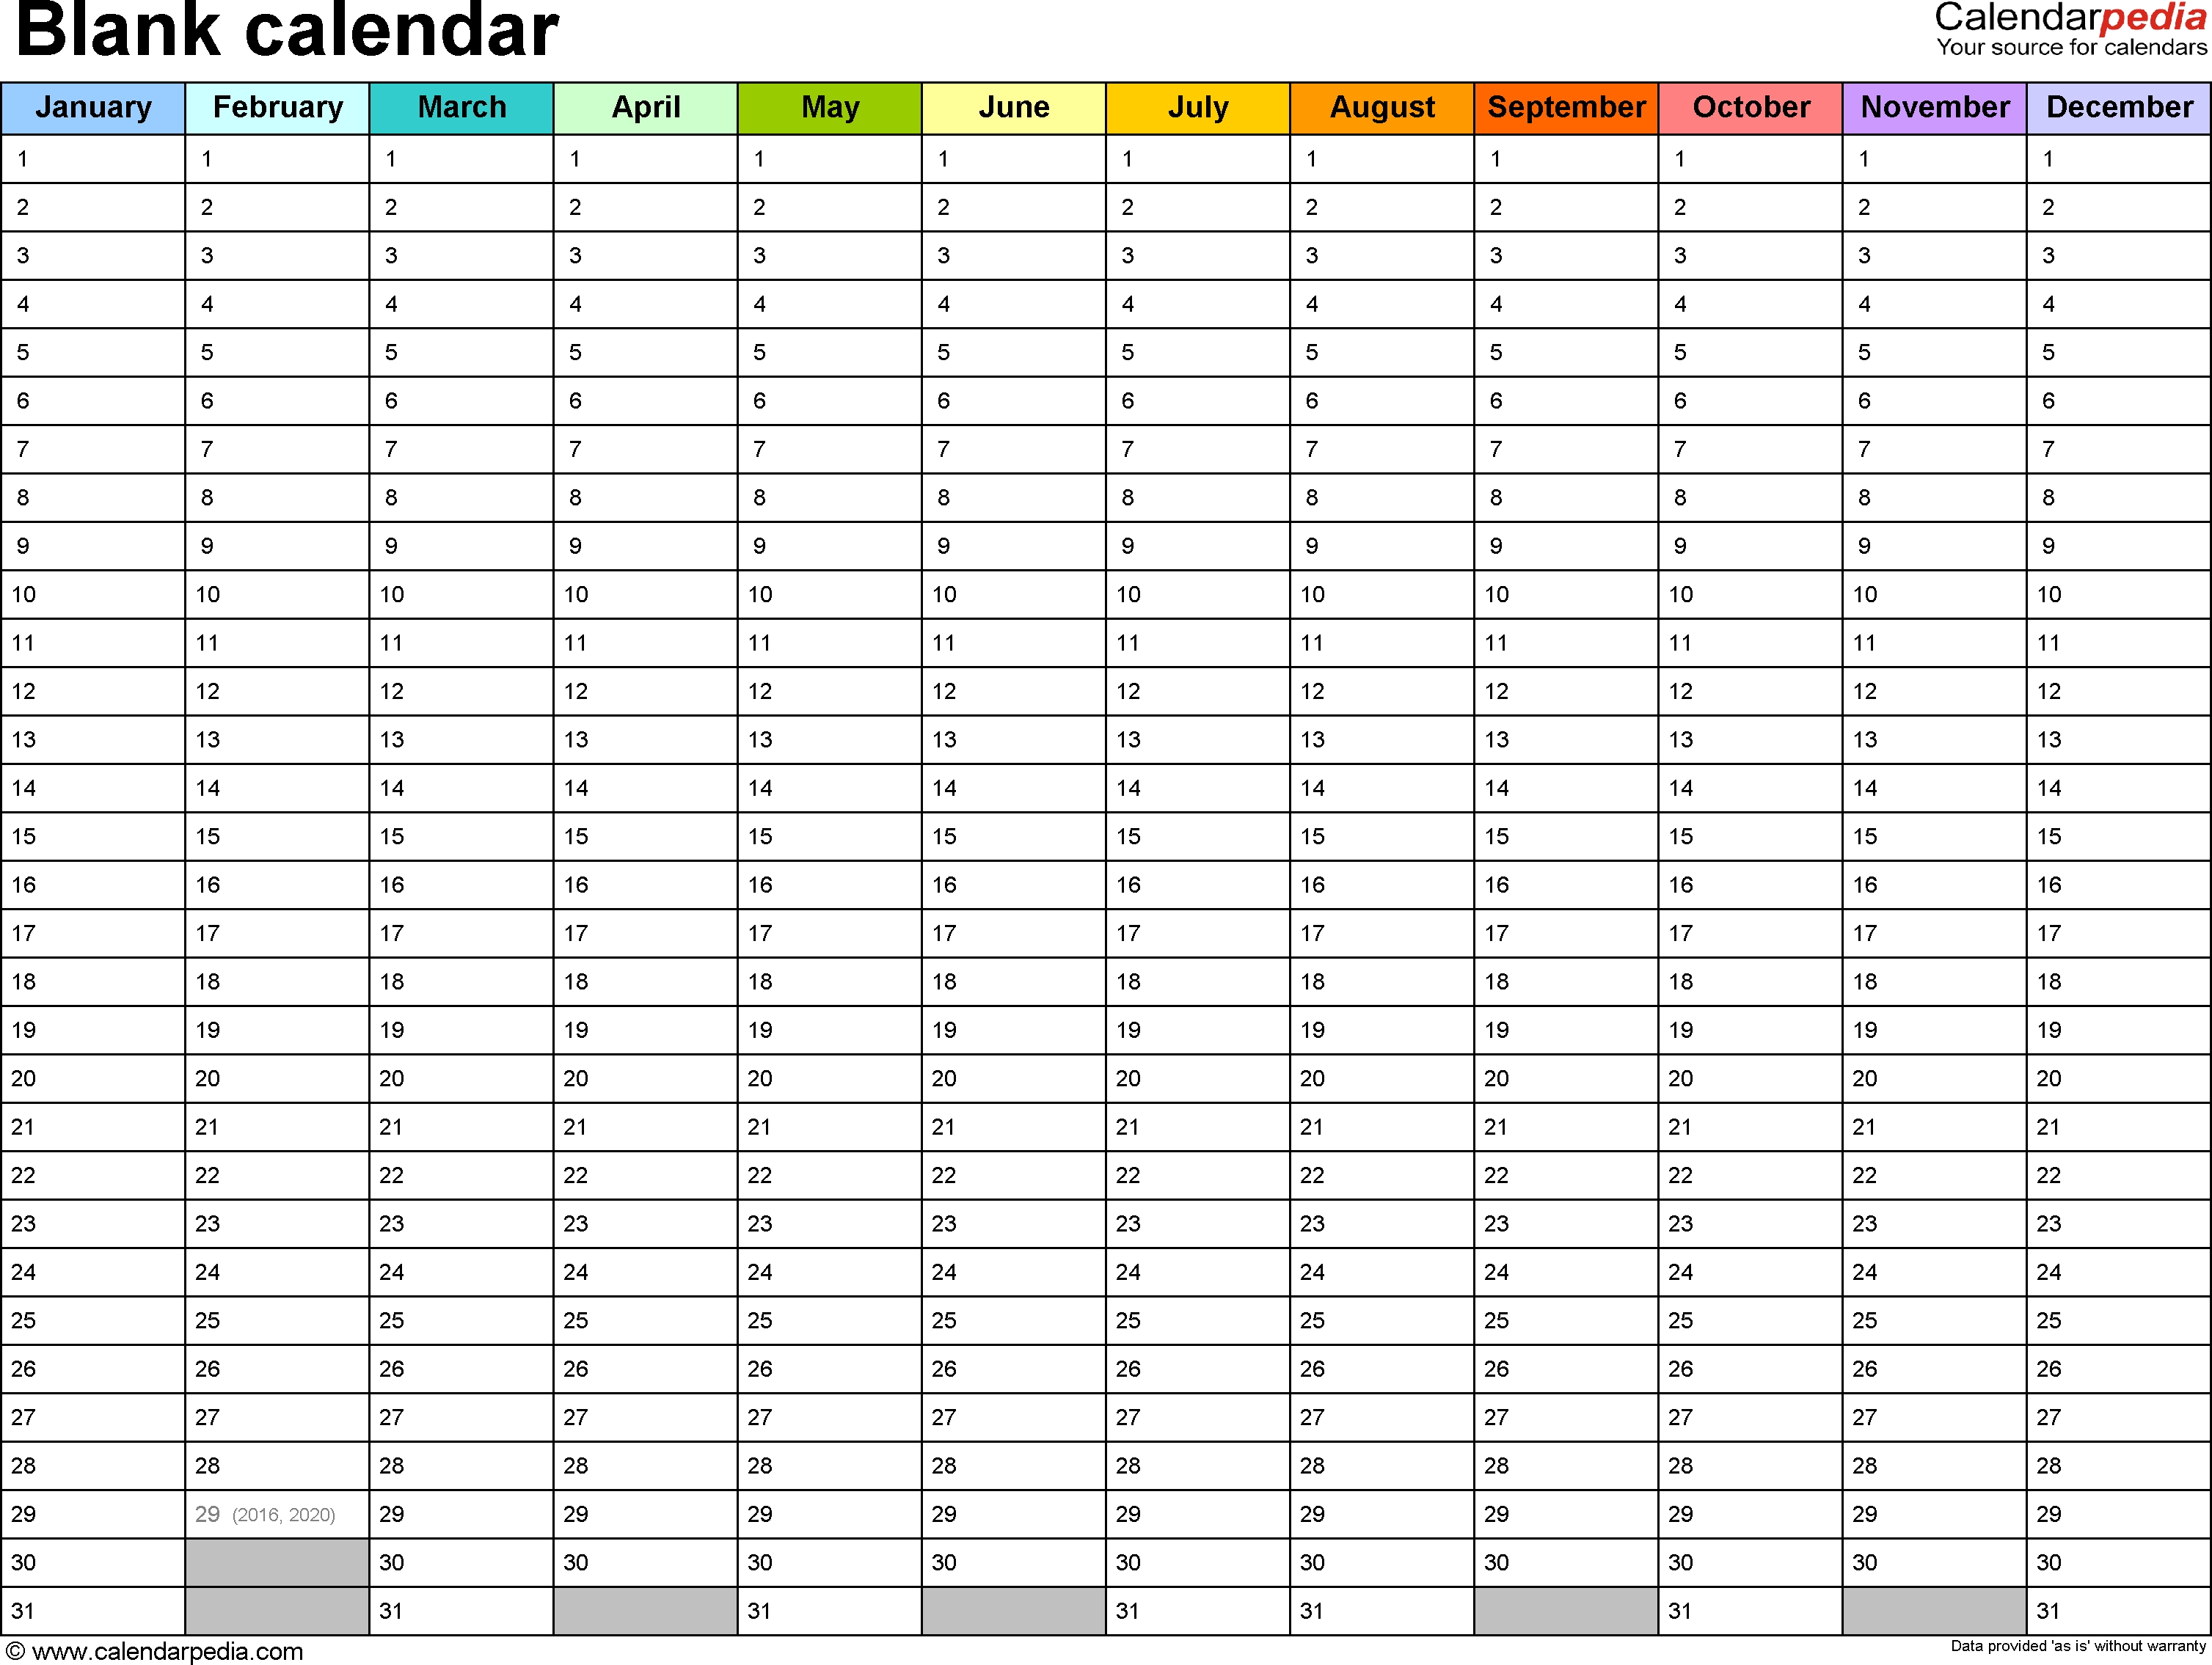 Blank Calendar - 9 Free Printable Microsoft Word Templates within Free Printable Blank Monthly Calendar Templates